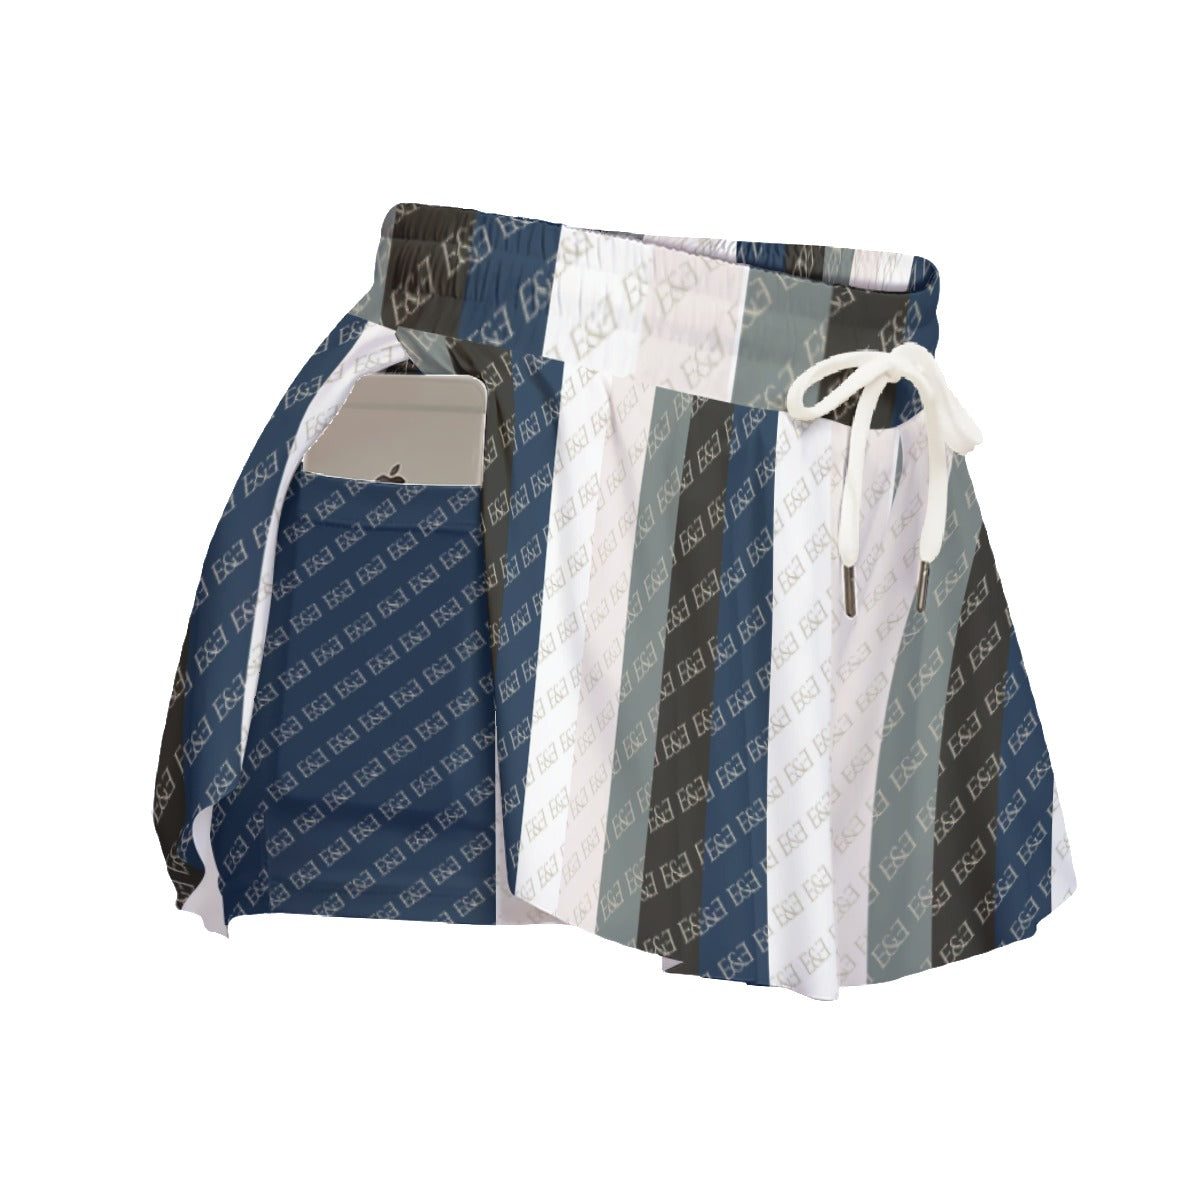 E&E Signature Sport Skorts With Pocket. Skirt / Short. Pattern made by the Designer Maria Al